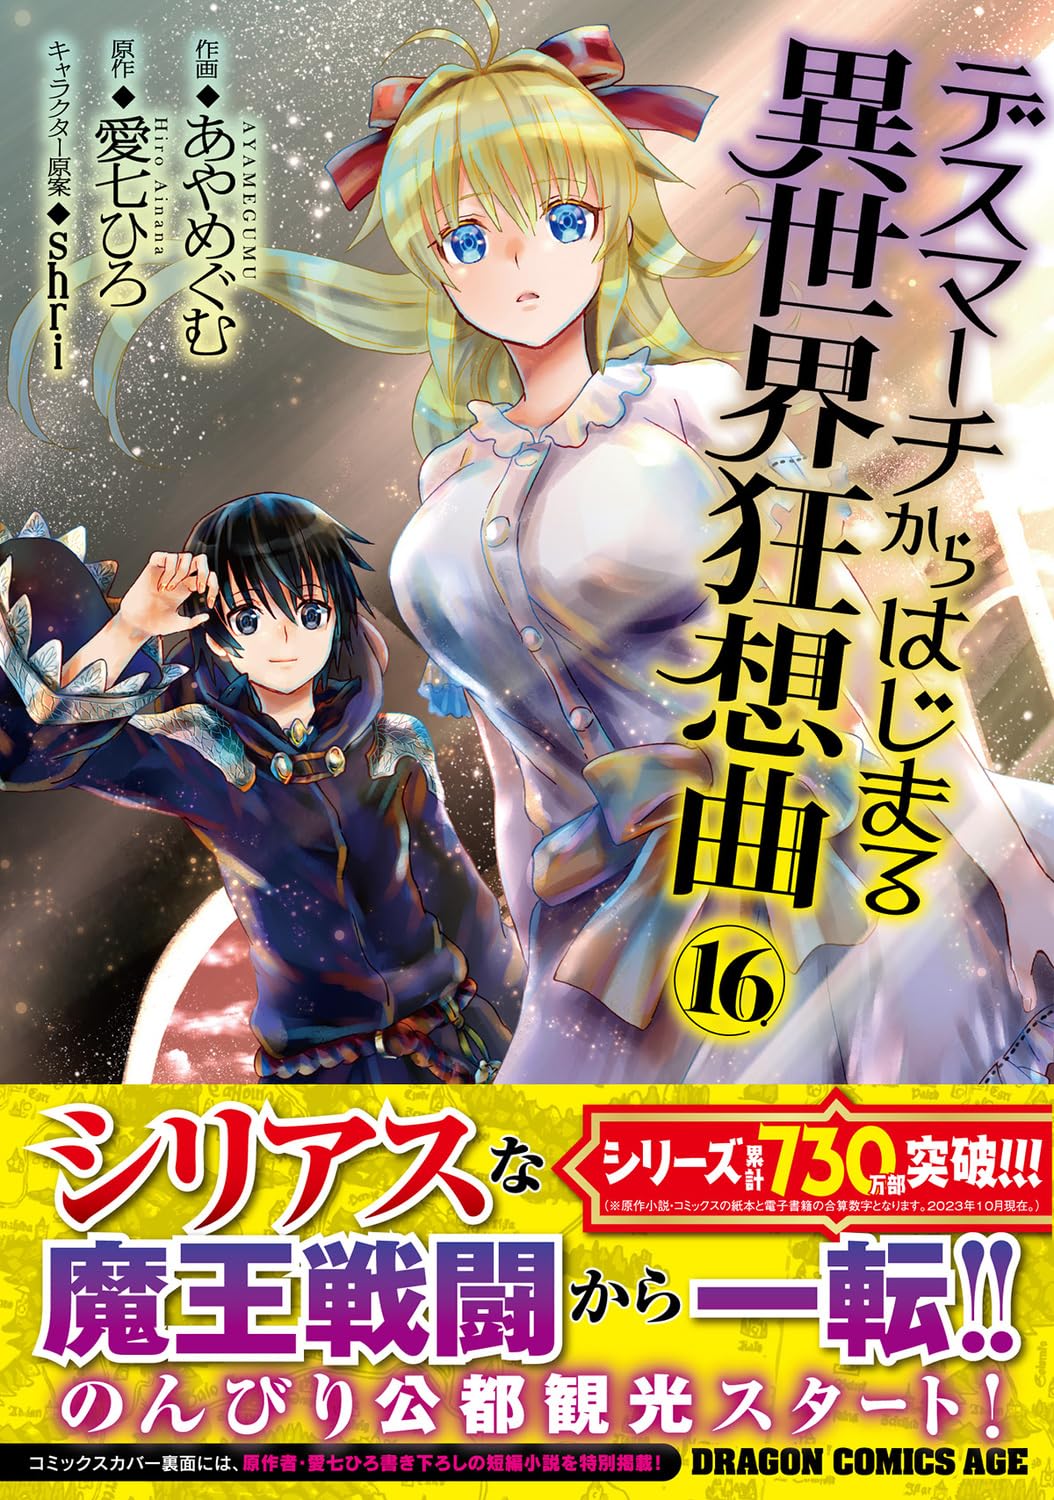 CDJapan : Death March to the Parallel World Rhapsody (Death March kara  Hajimaru Isekai Kyousoukyoku) 18 (Kadokawa BOOKS) [Light Novel] Hiro  Ainana, shri BOOK